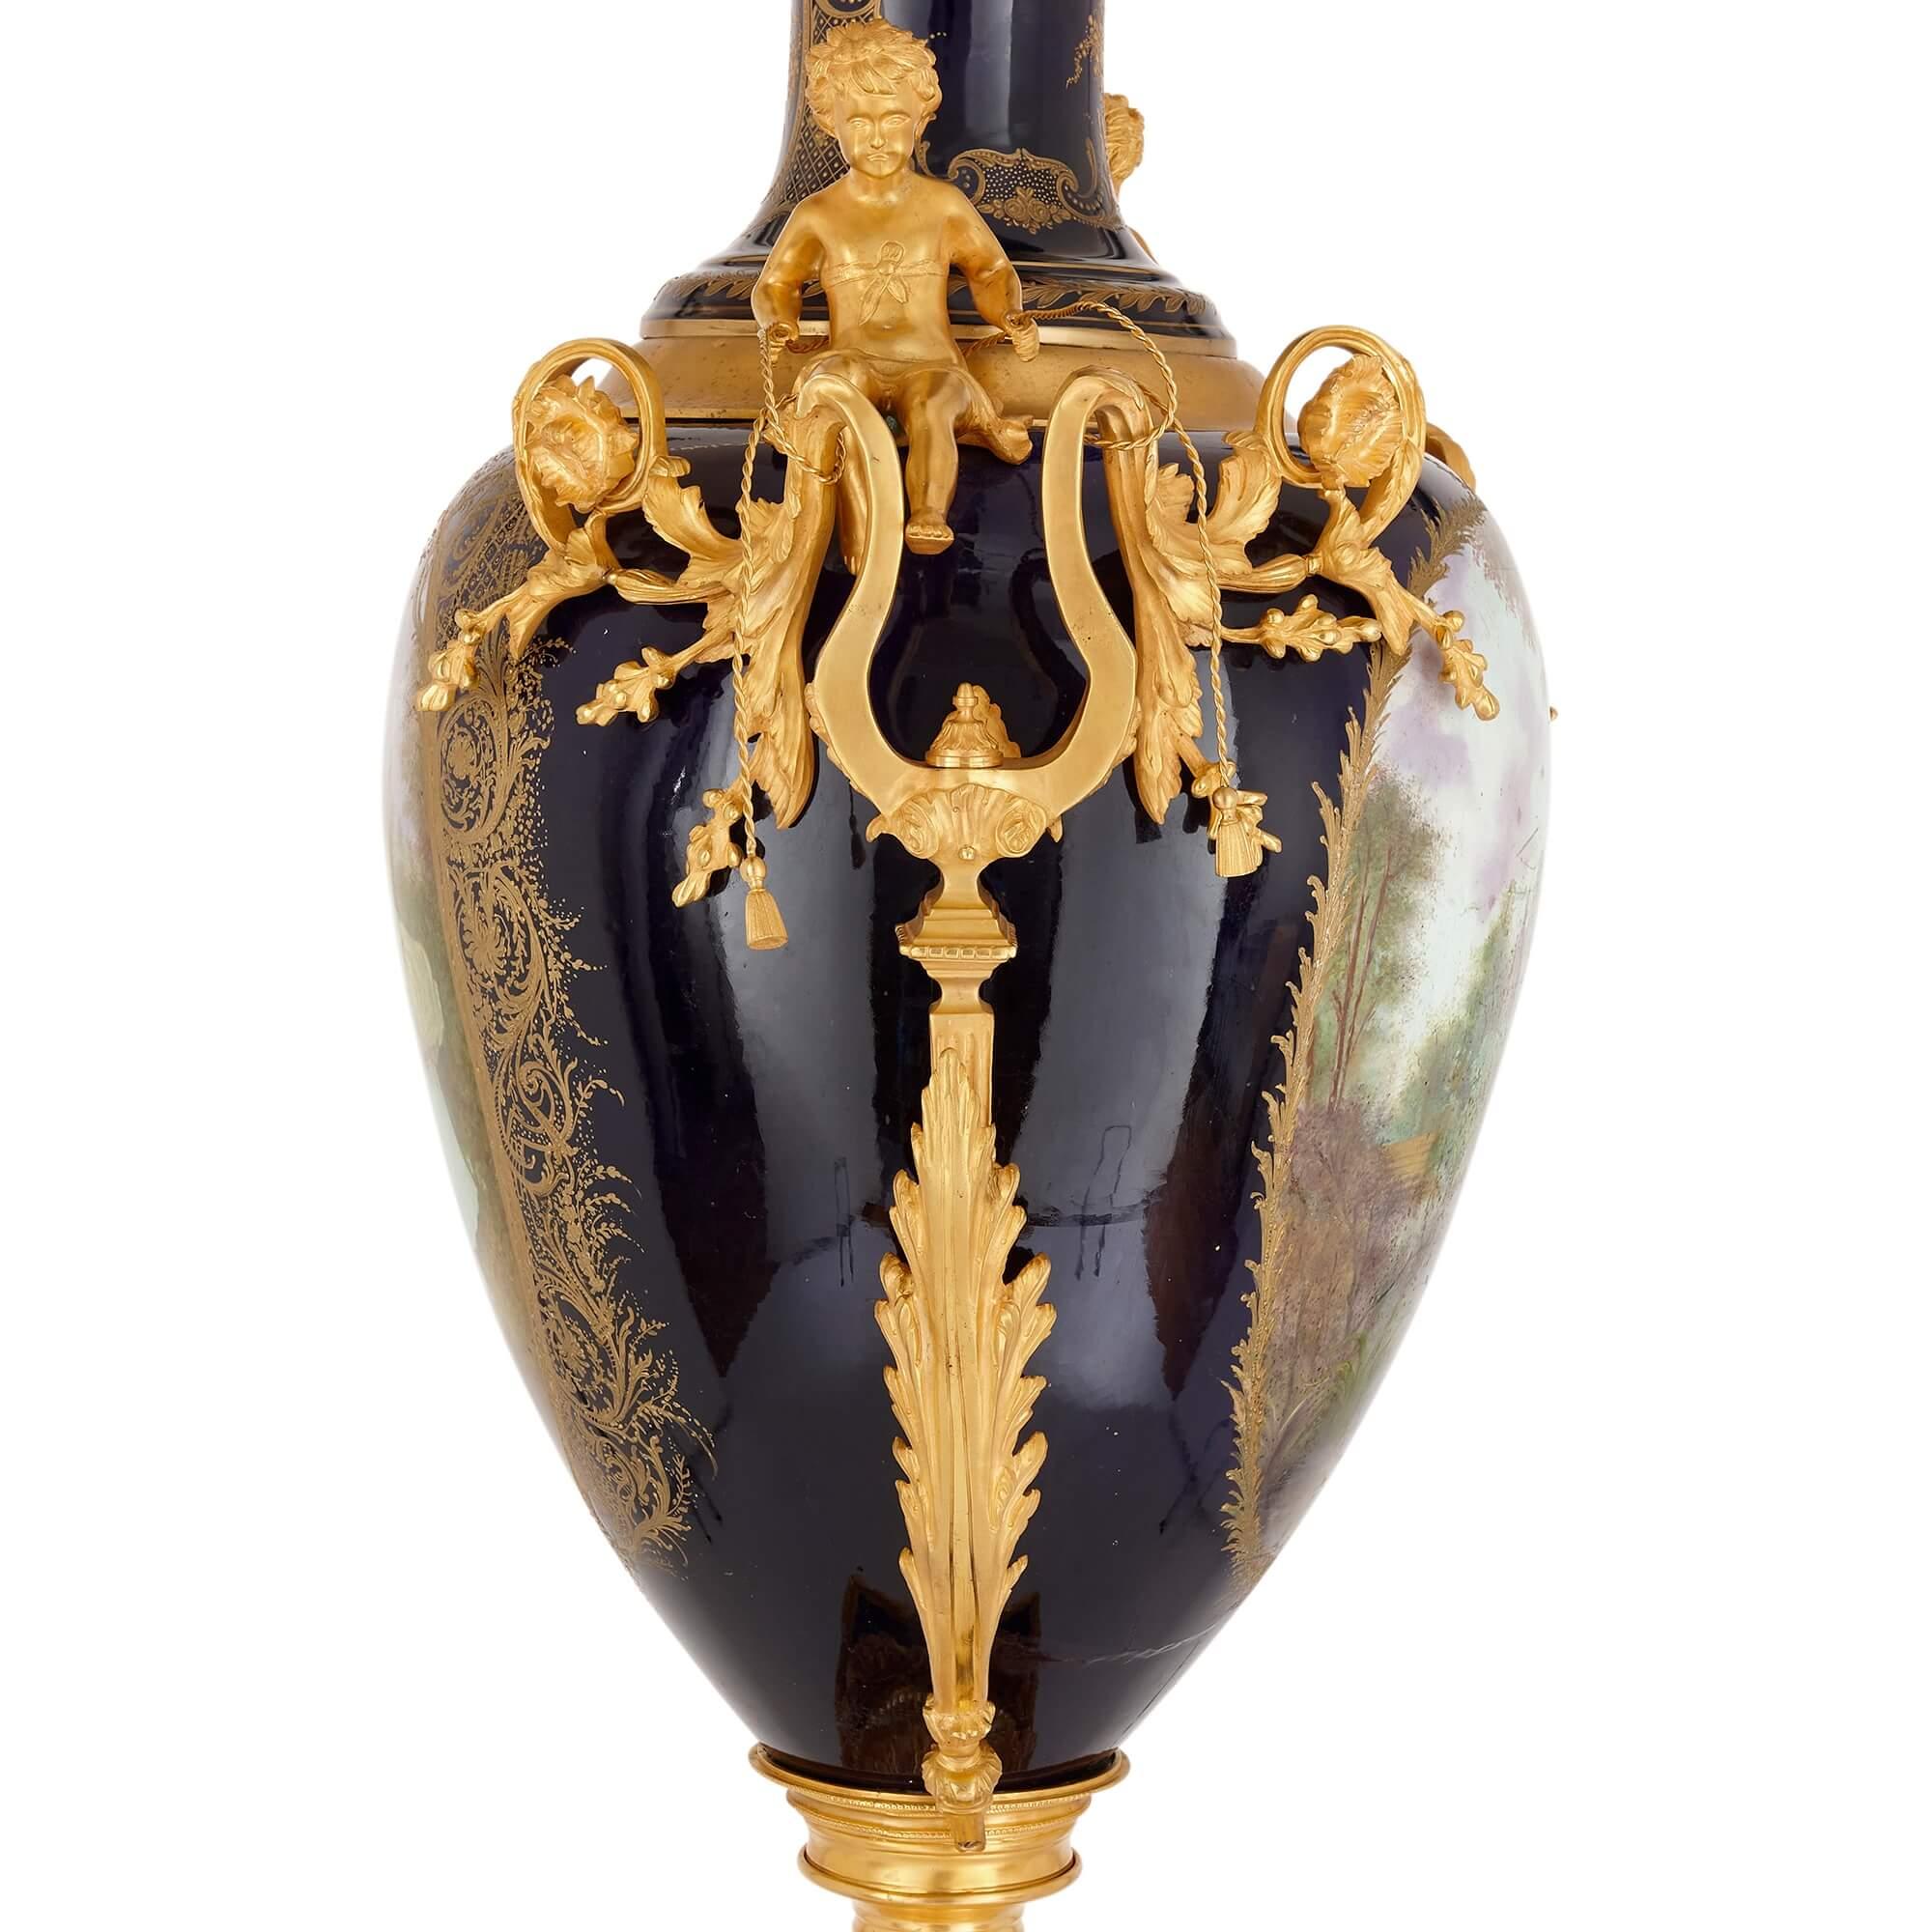 20th Century Large Sèvres-style Gilt-Bronze Mounted Porcelain Vase with Pedestal For Sale